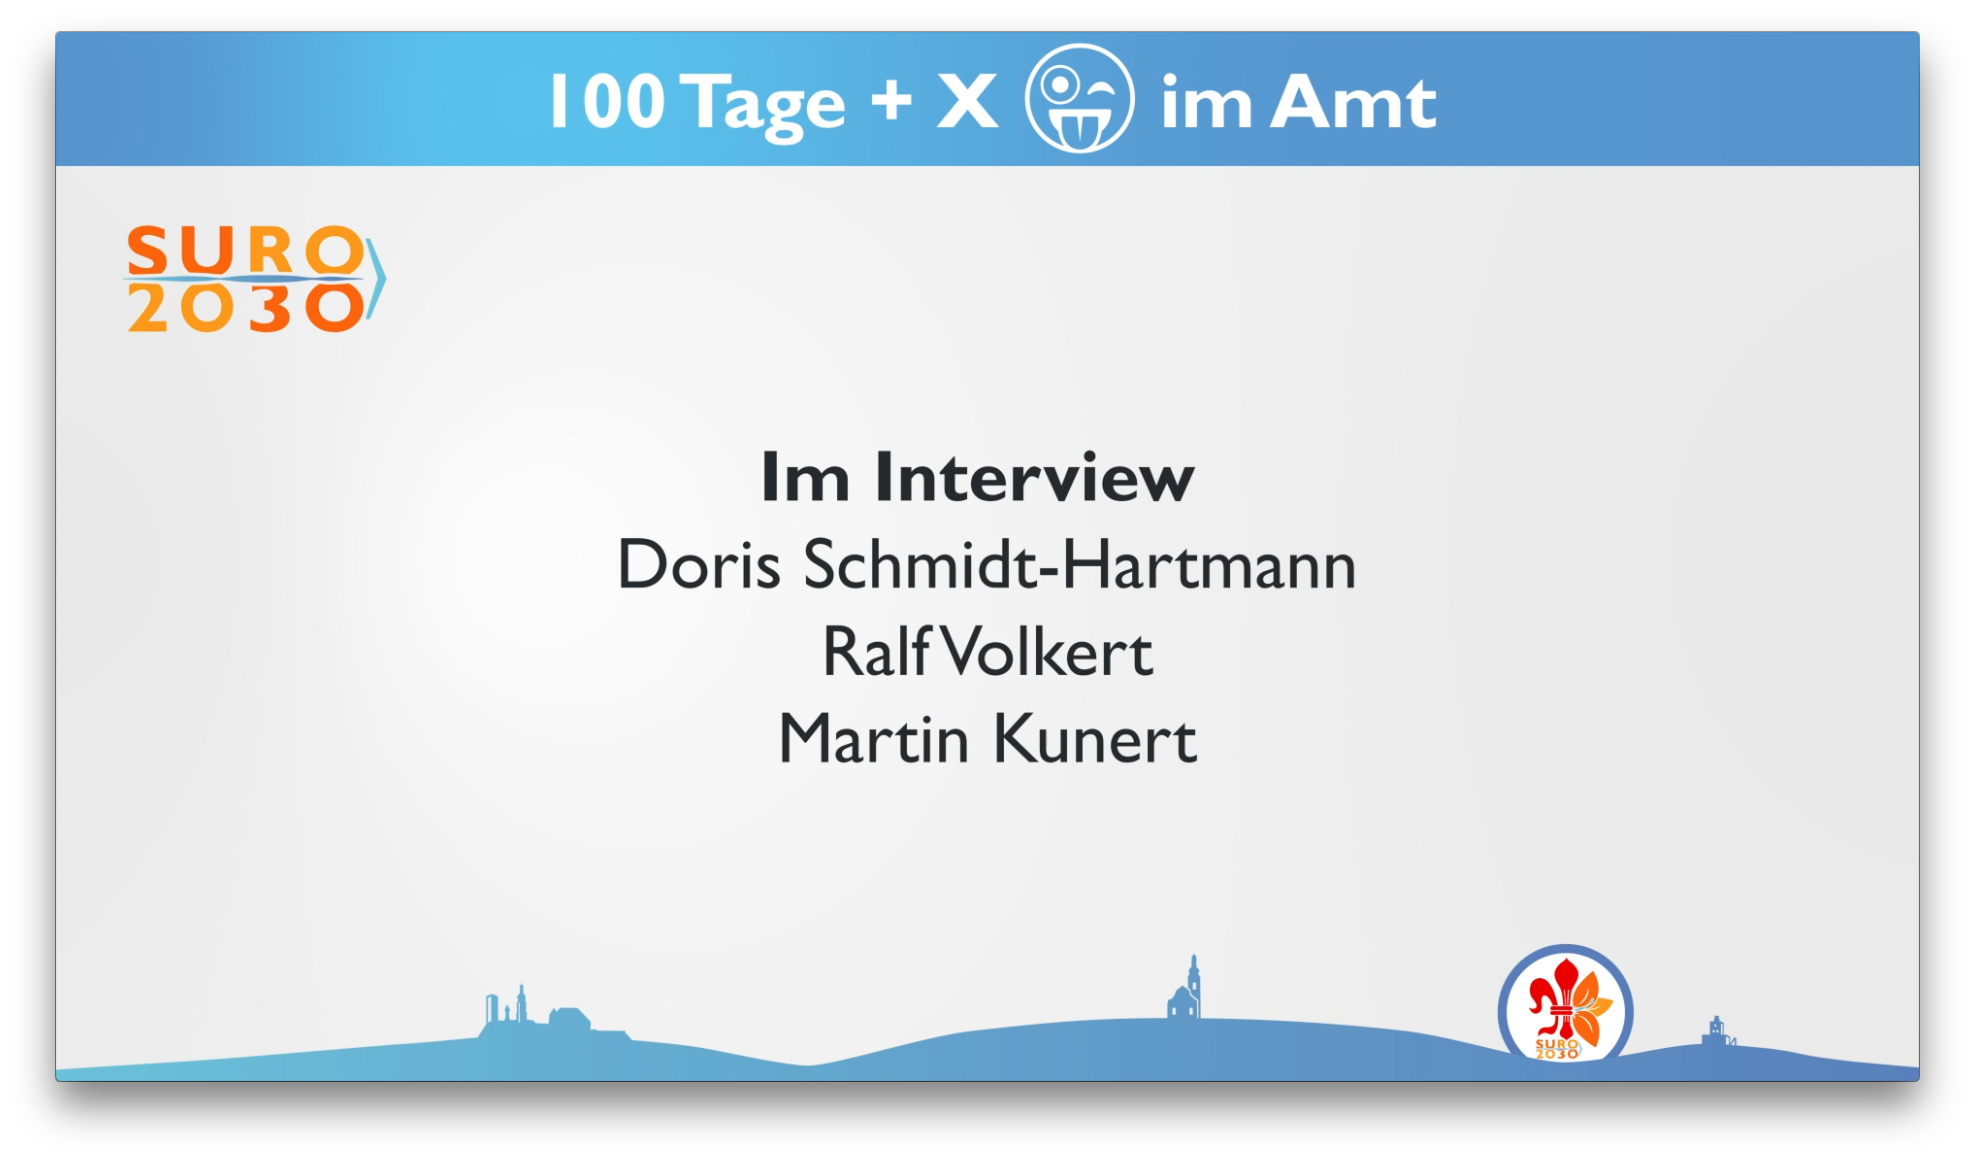 We proudly present: 100 Tage + X im Amt – Das Videointerview